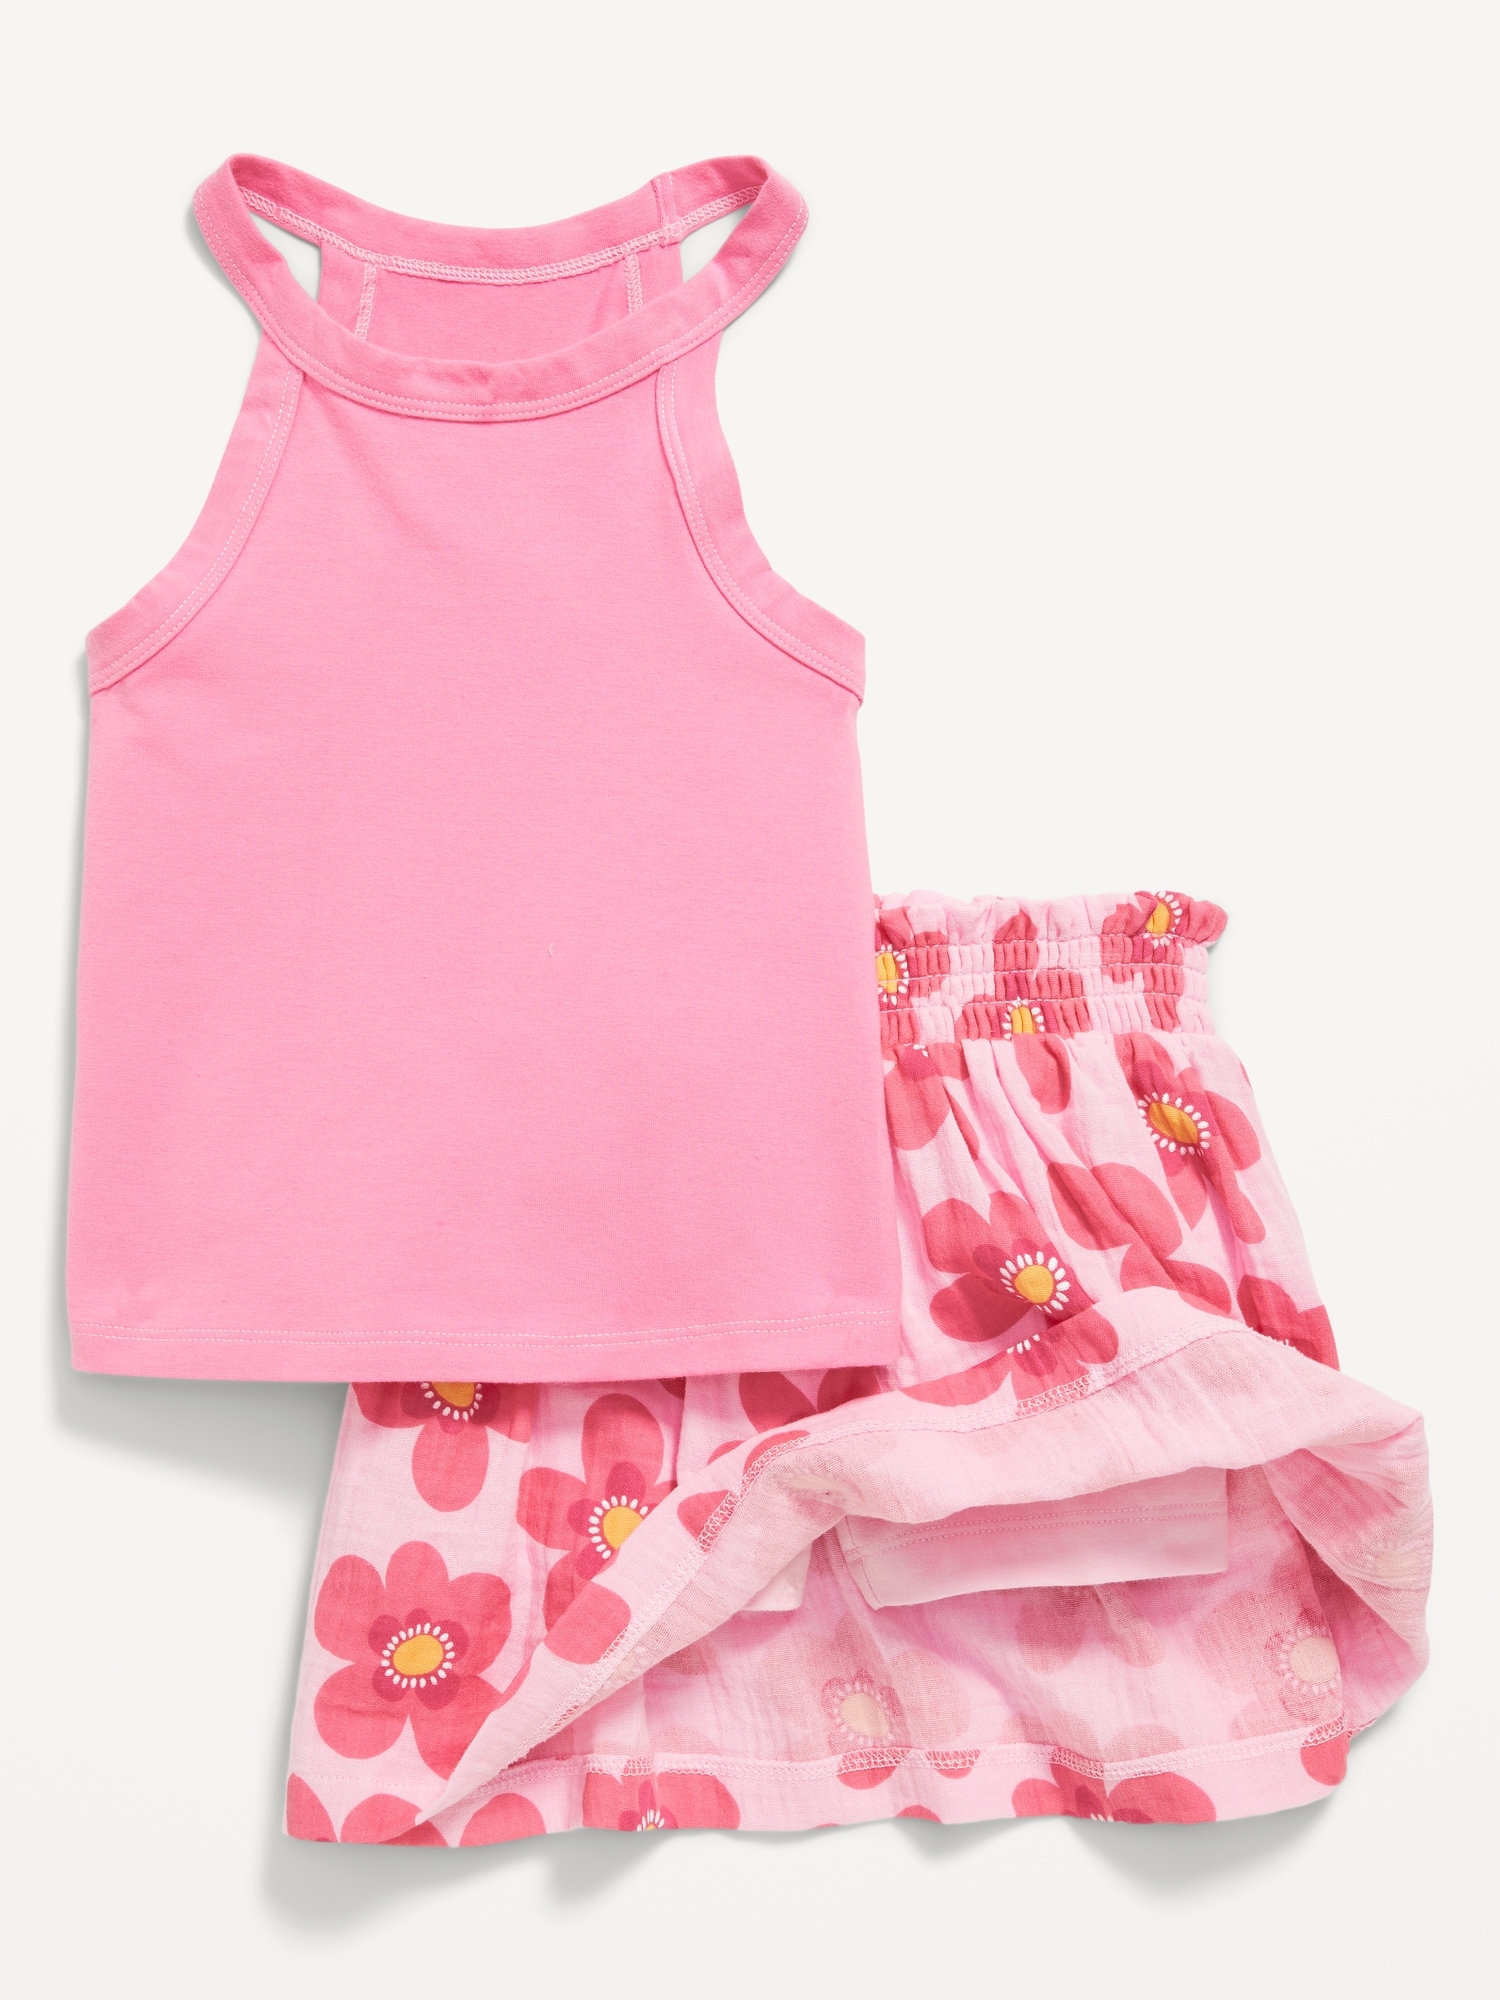 Sleeveless Tank Top and Skort Set for Toddler Girls